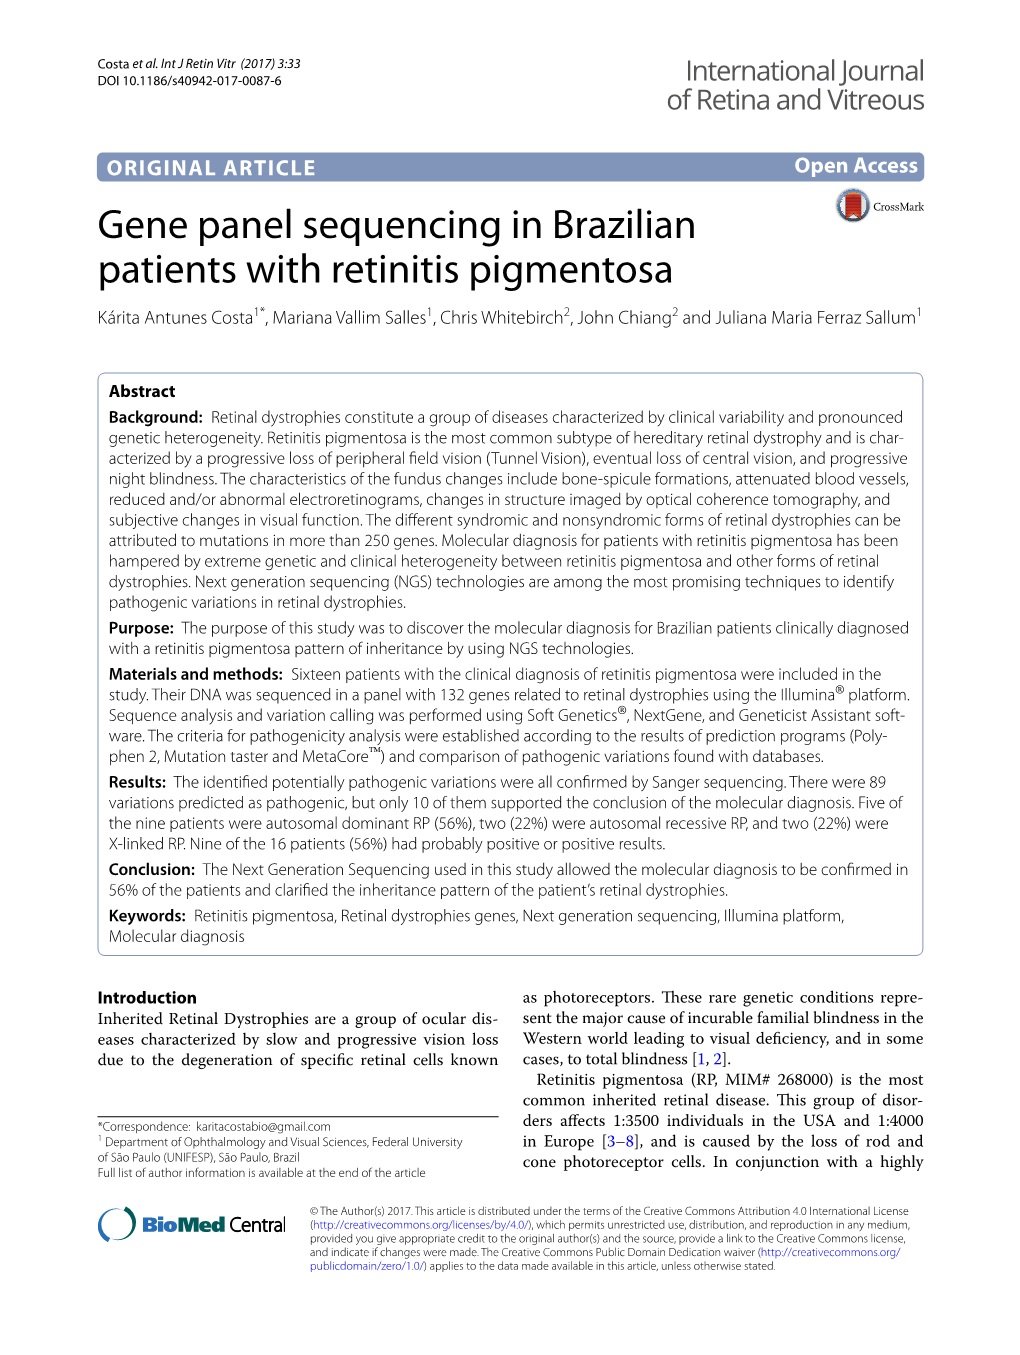 Gene Panel Sequencing in Brazilian Patients with Retinitis Pigmentosa